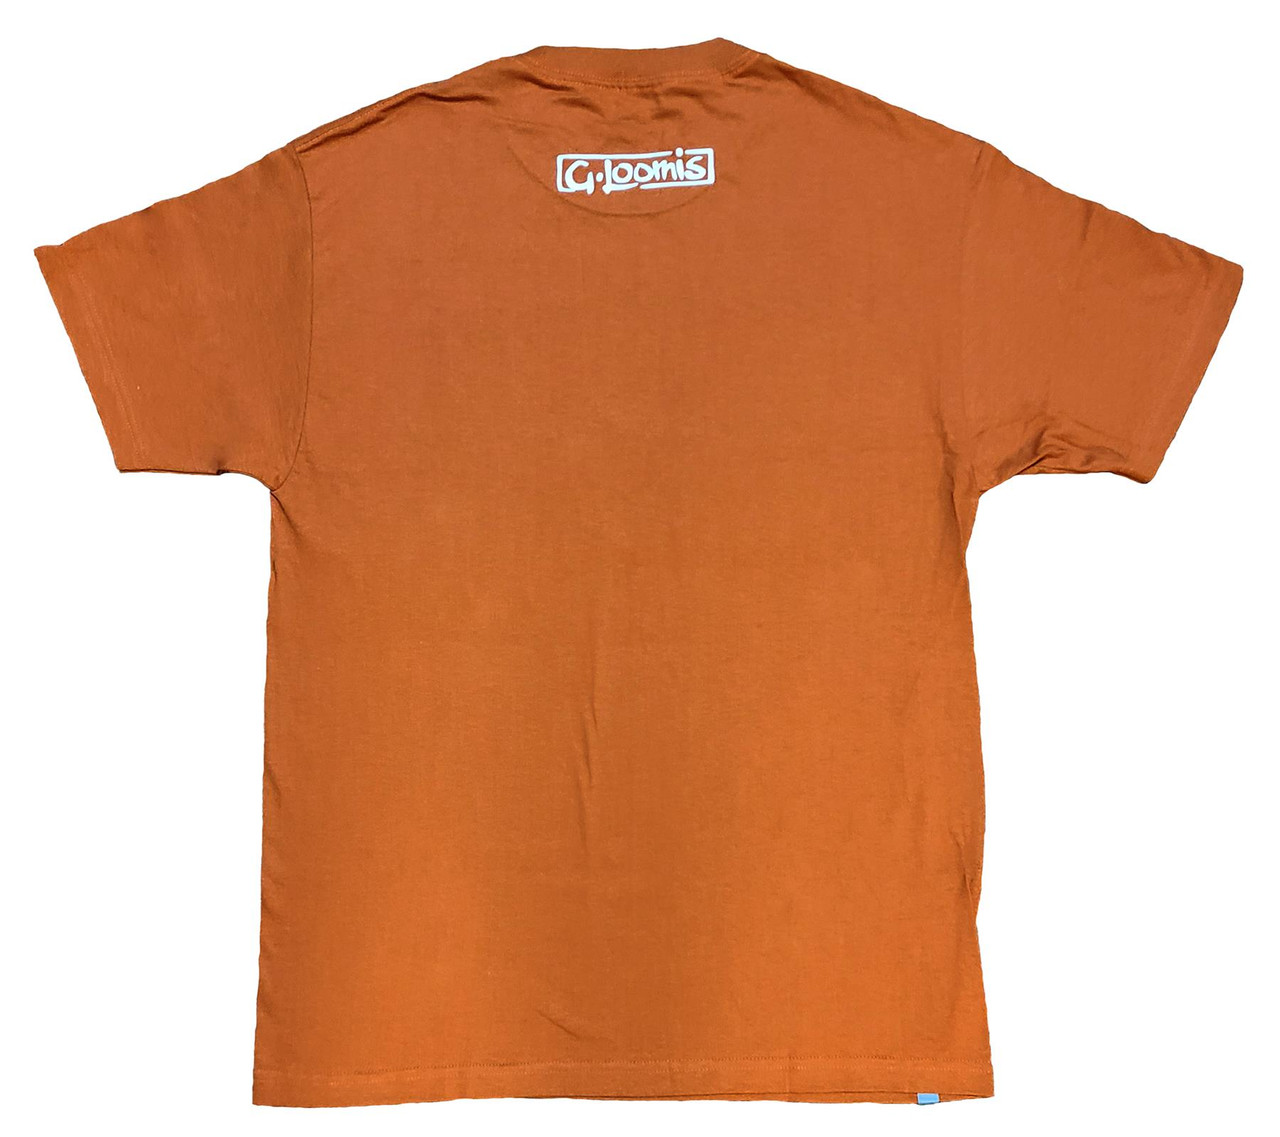 G. Loomis Corpo Fishing Men's T-Shirt Burnt Orange - Large - Retro